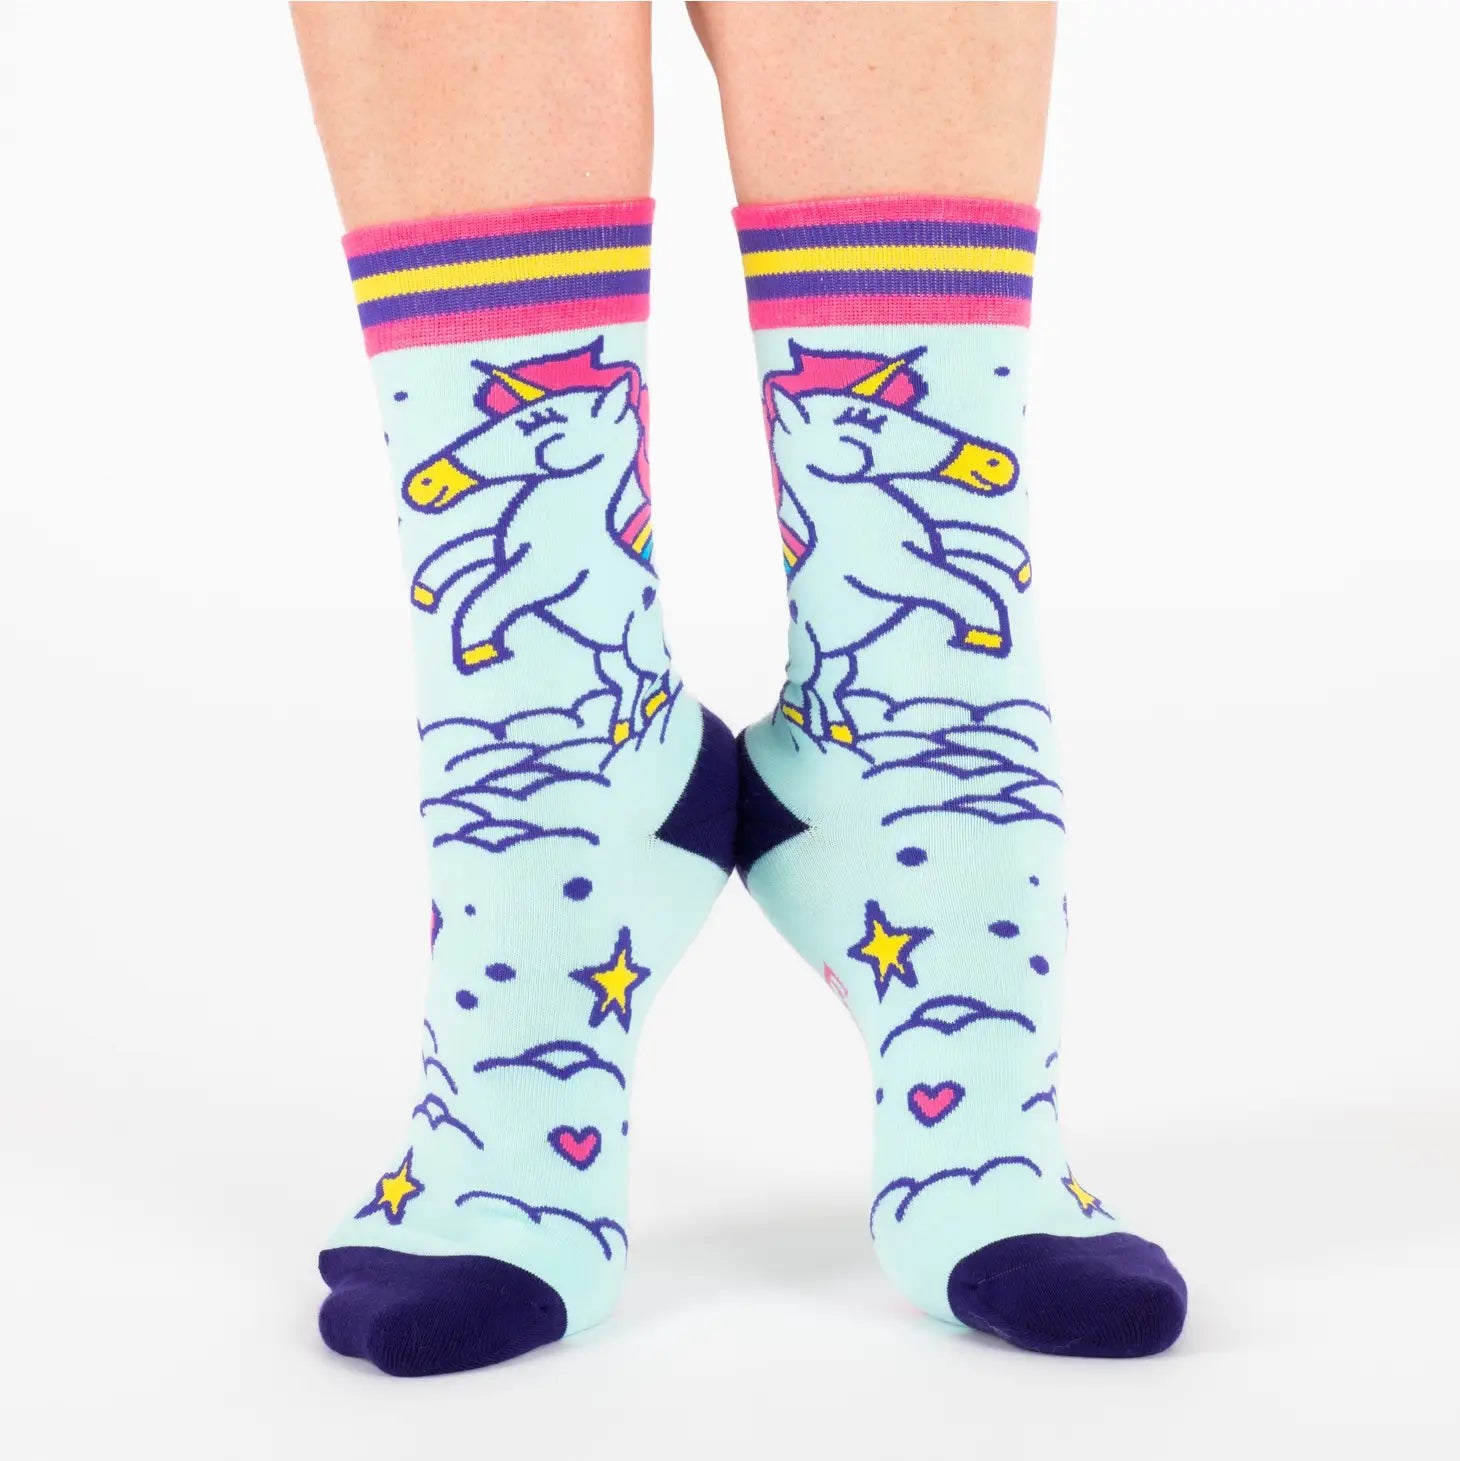 FootClothes LLC - Cute Unicorn Socks